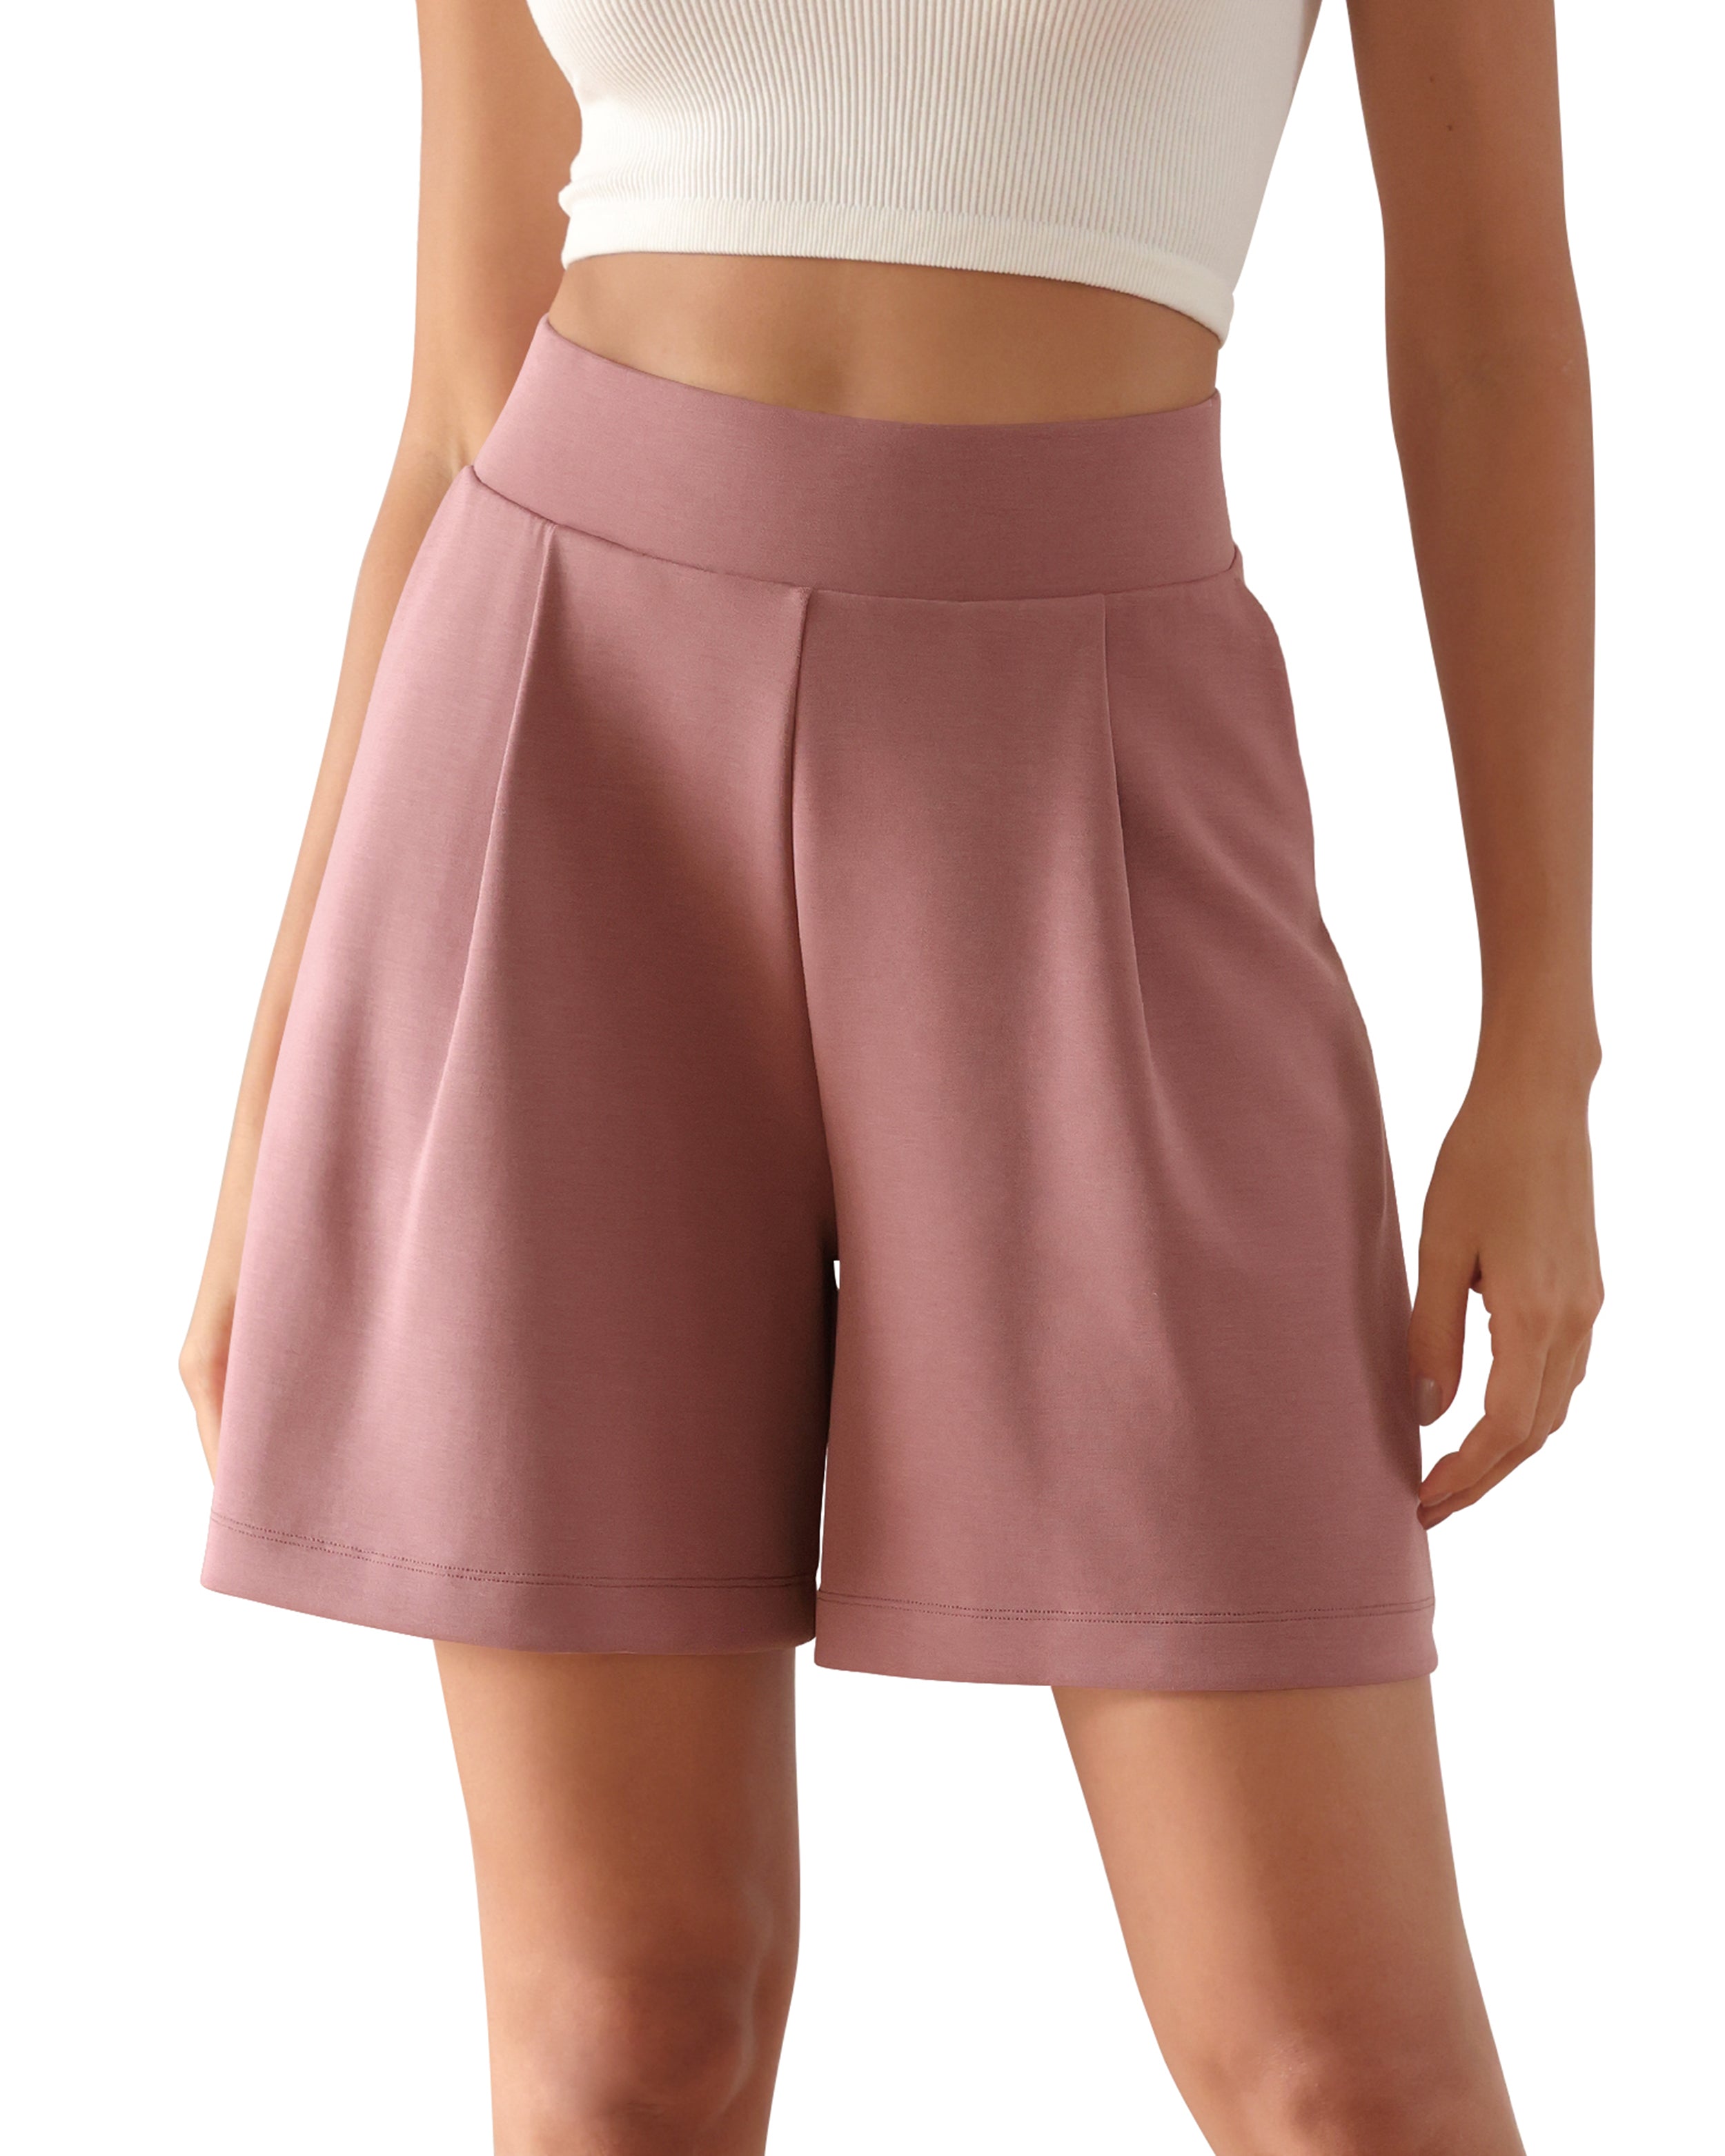 Modal Soft High Waist Wide Leg Shorts with Pockets Mauve Pink 6 inch - ododos